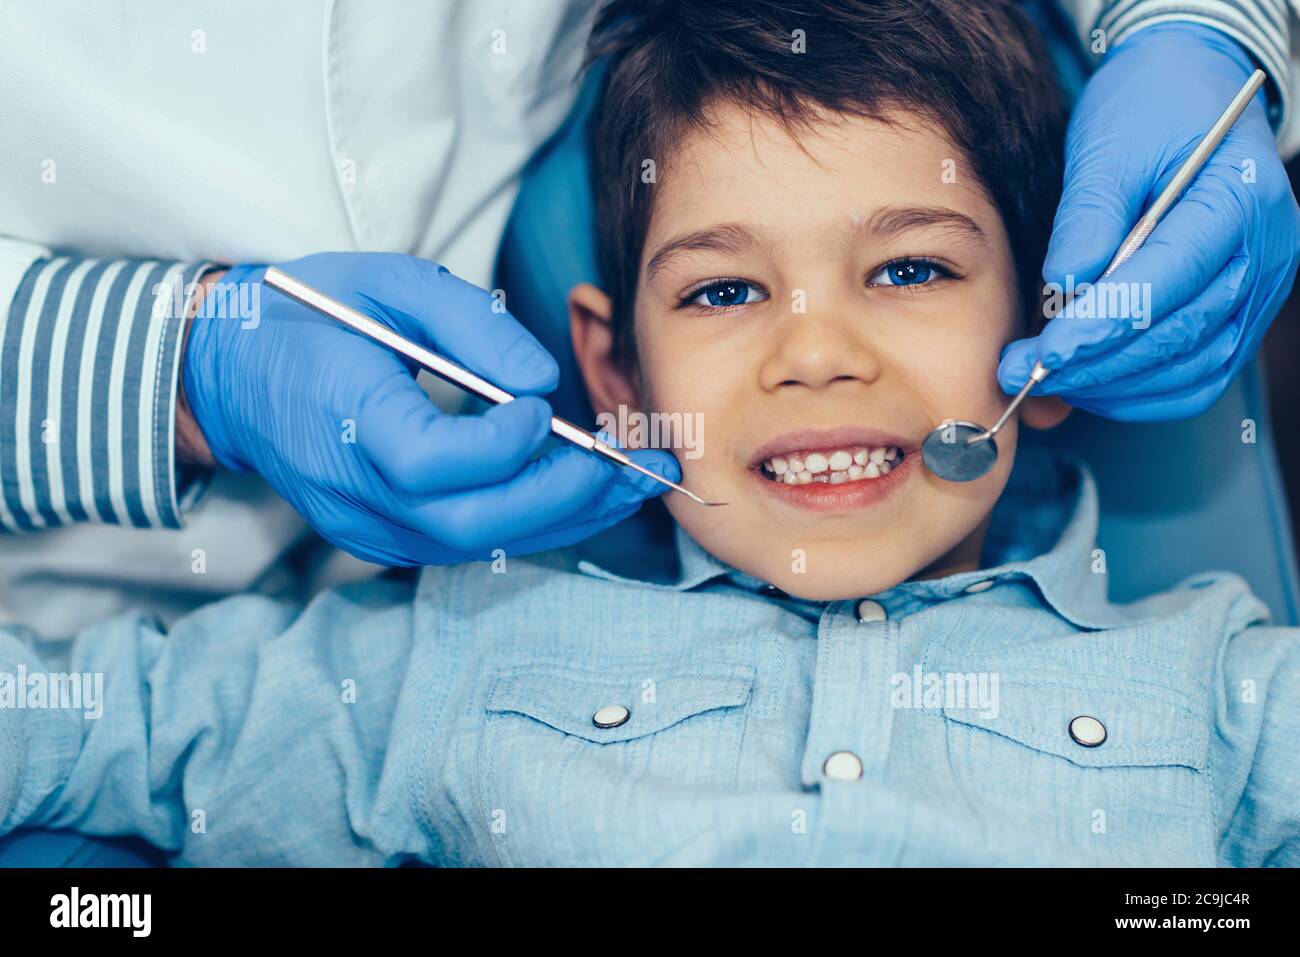 Young boy having dental check-up. Stock Photo